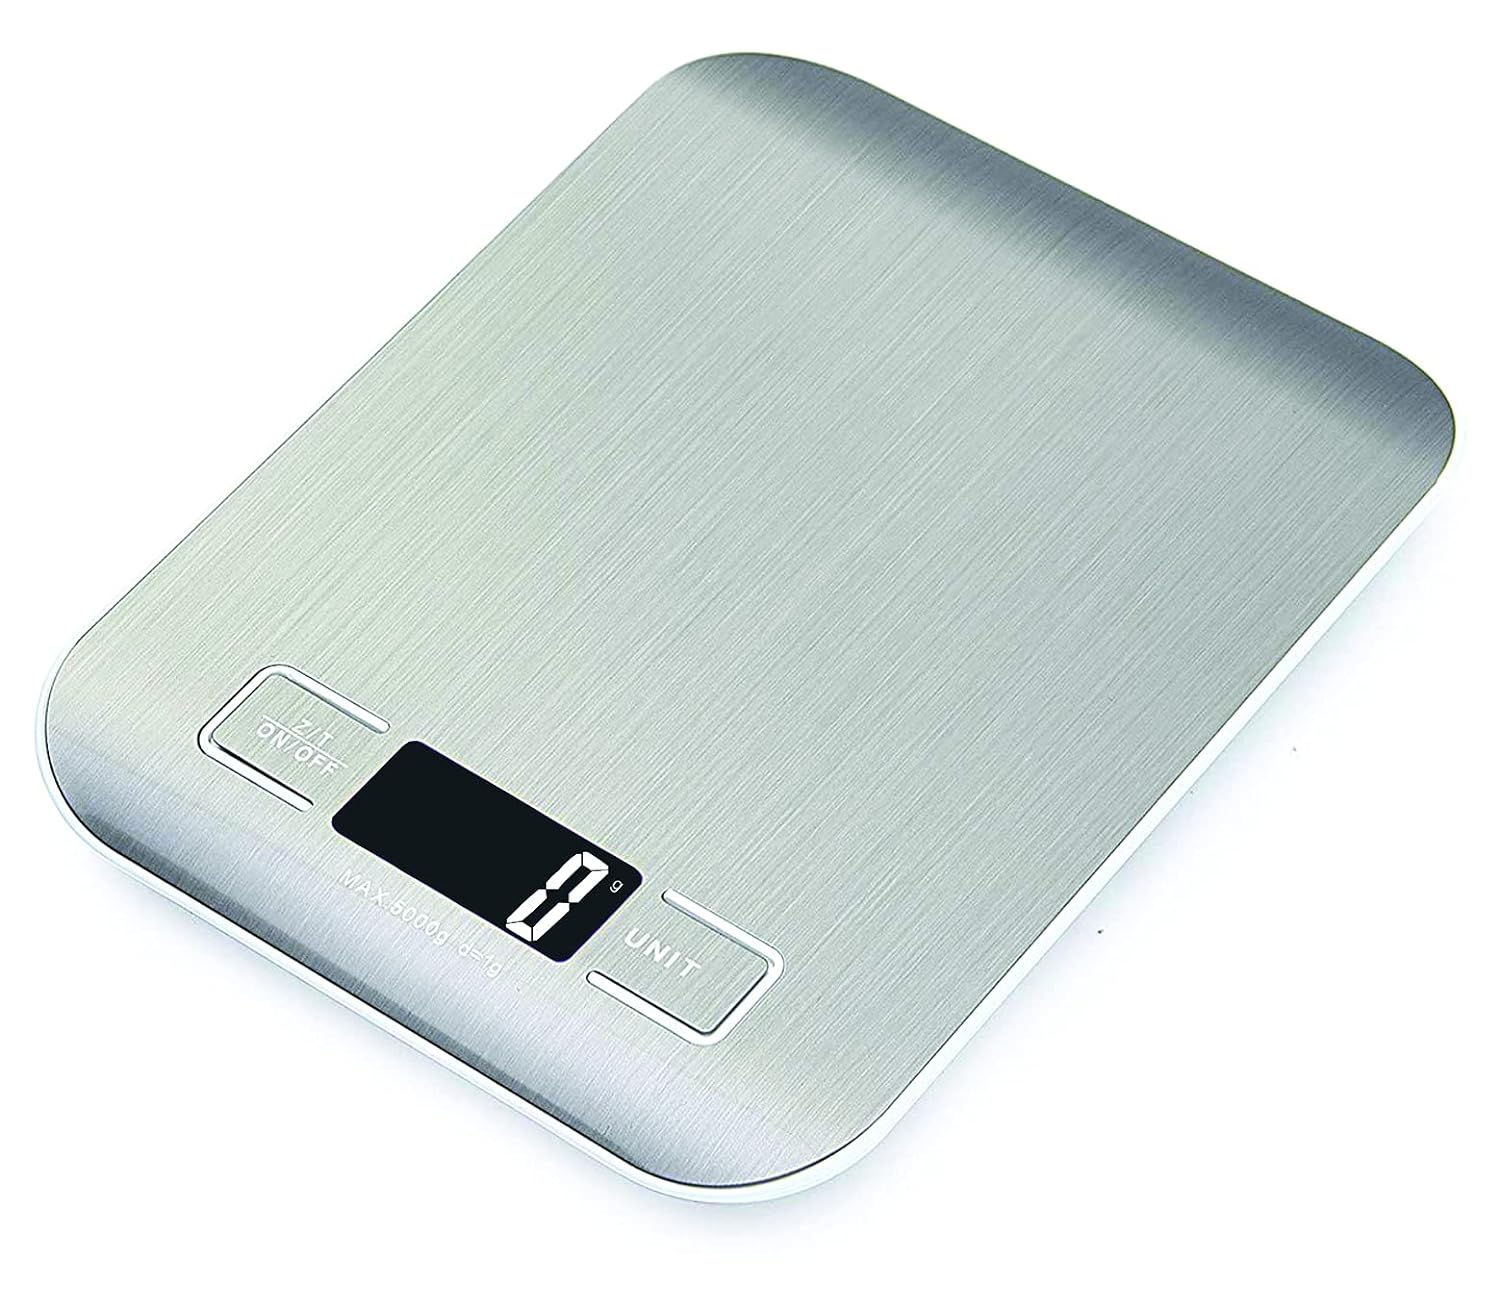 Custom Logo Stainless Steel Food scale 5kg Digital Electronic Baking Kitchen Scale